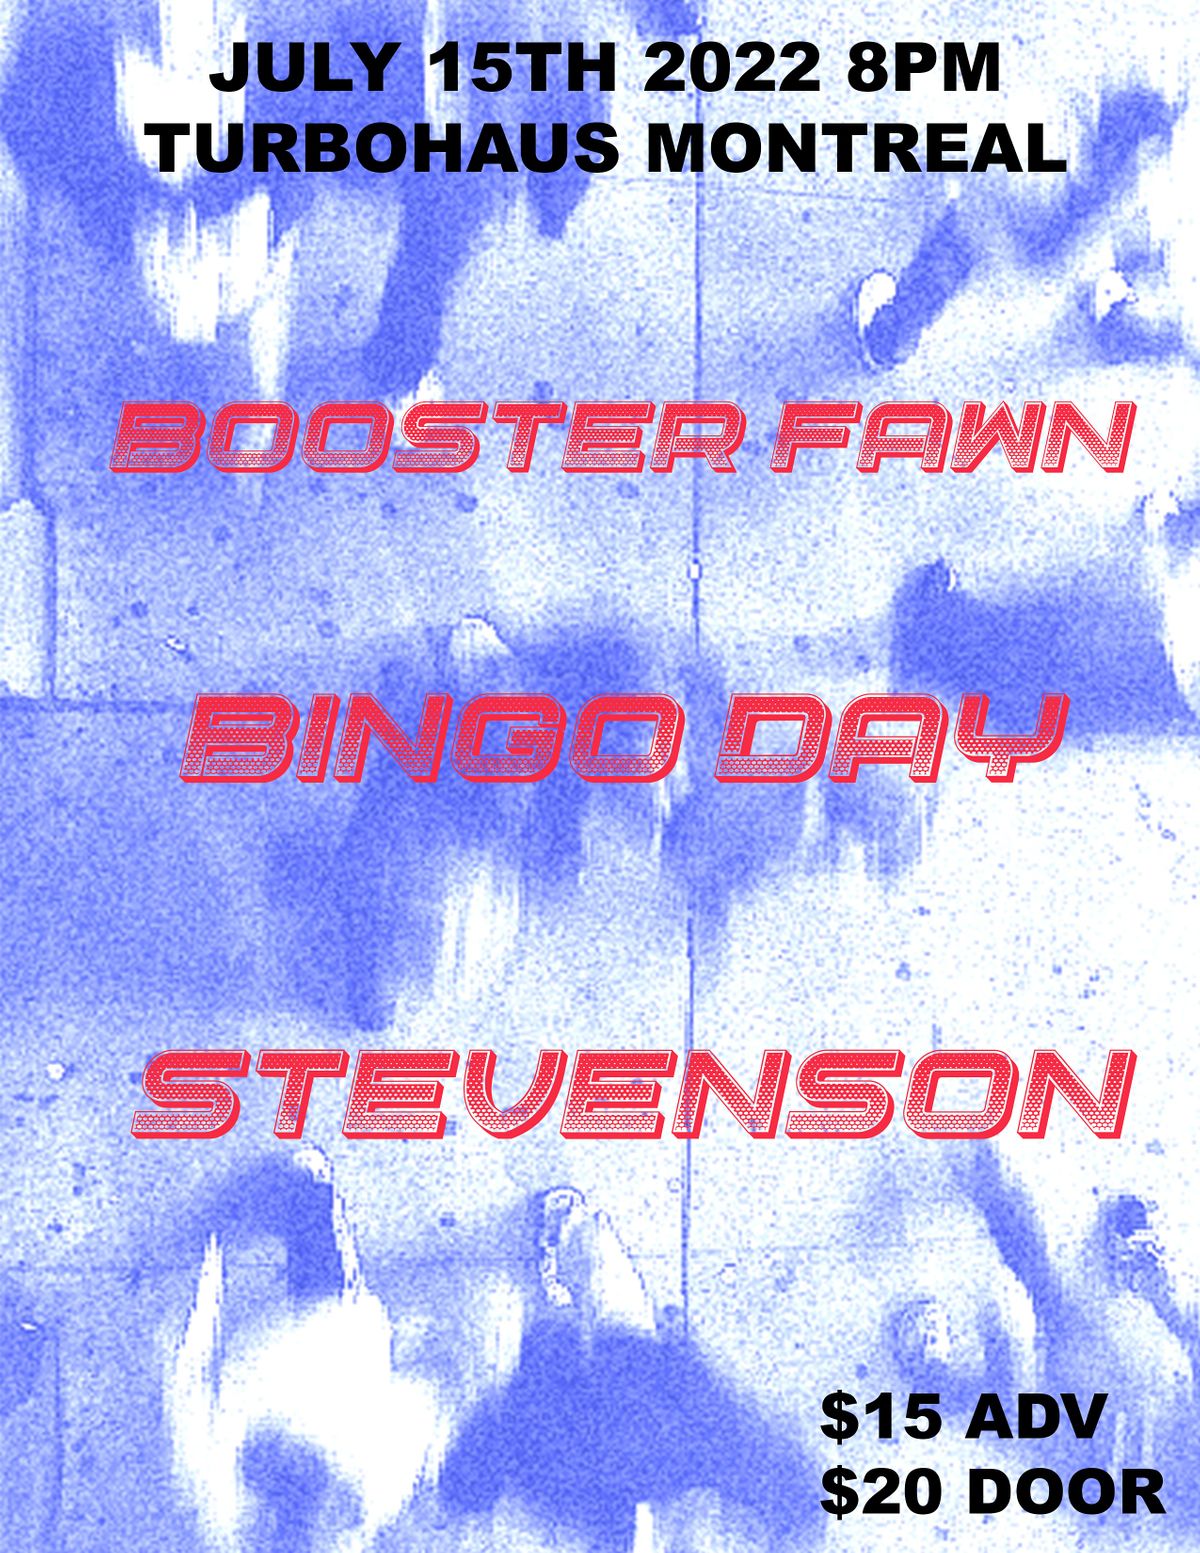 Booster Fawn - Stevenson - Bingo Day @ Turbohaus